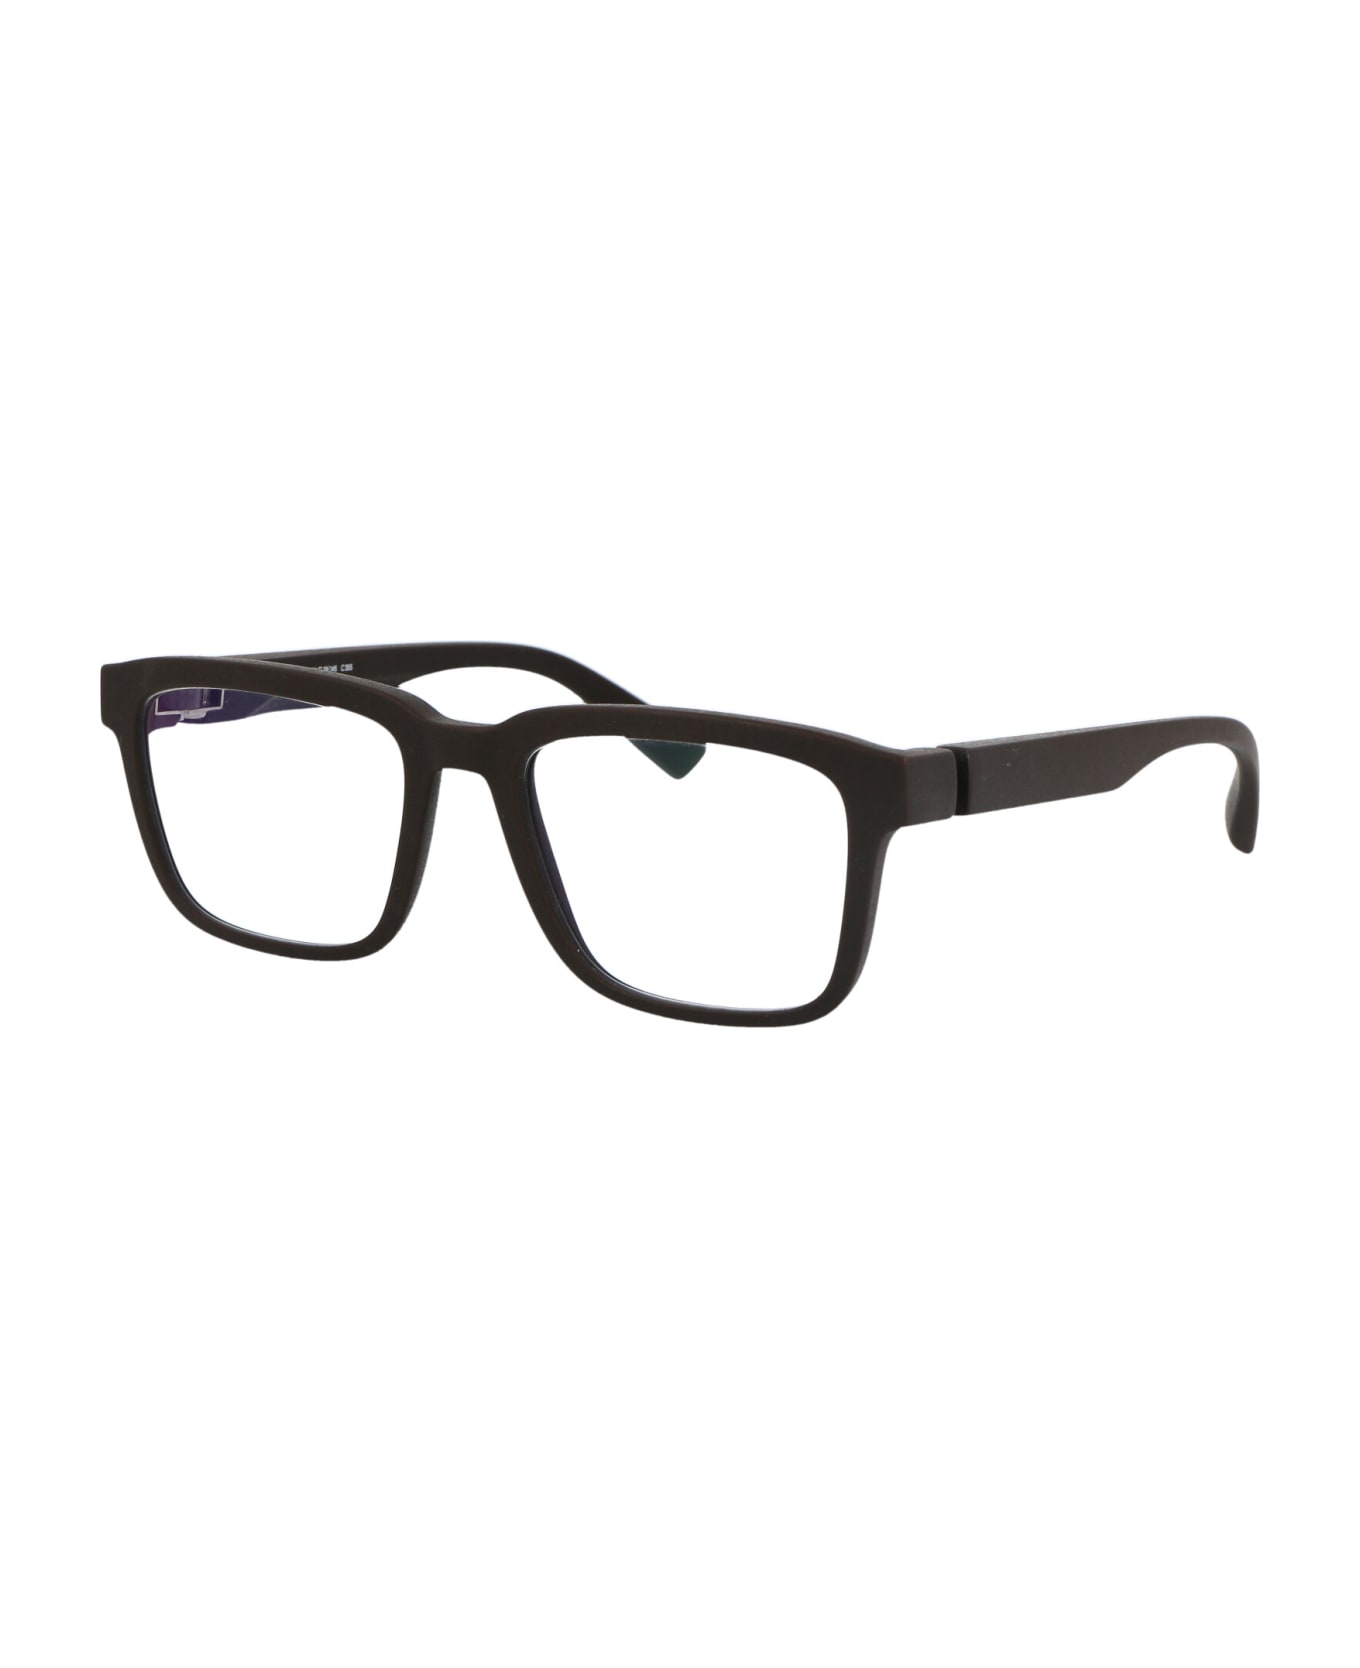 Mykita Helicon Glasses - 355 MD22 Ebony Brown Clear アイウェア